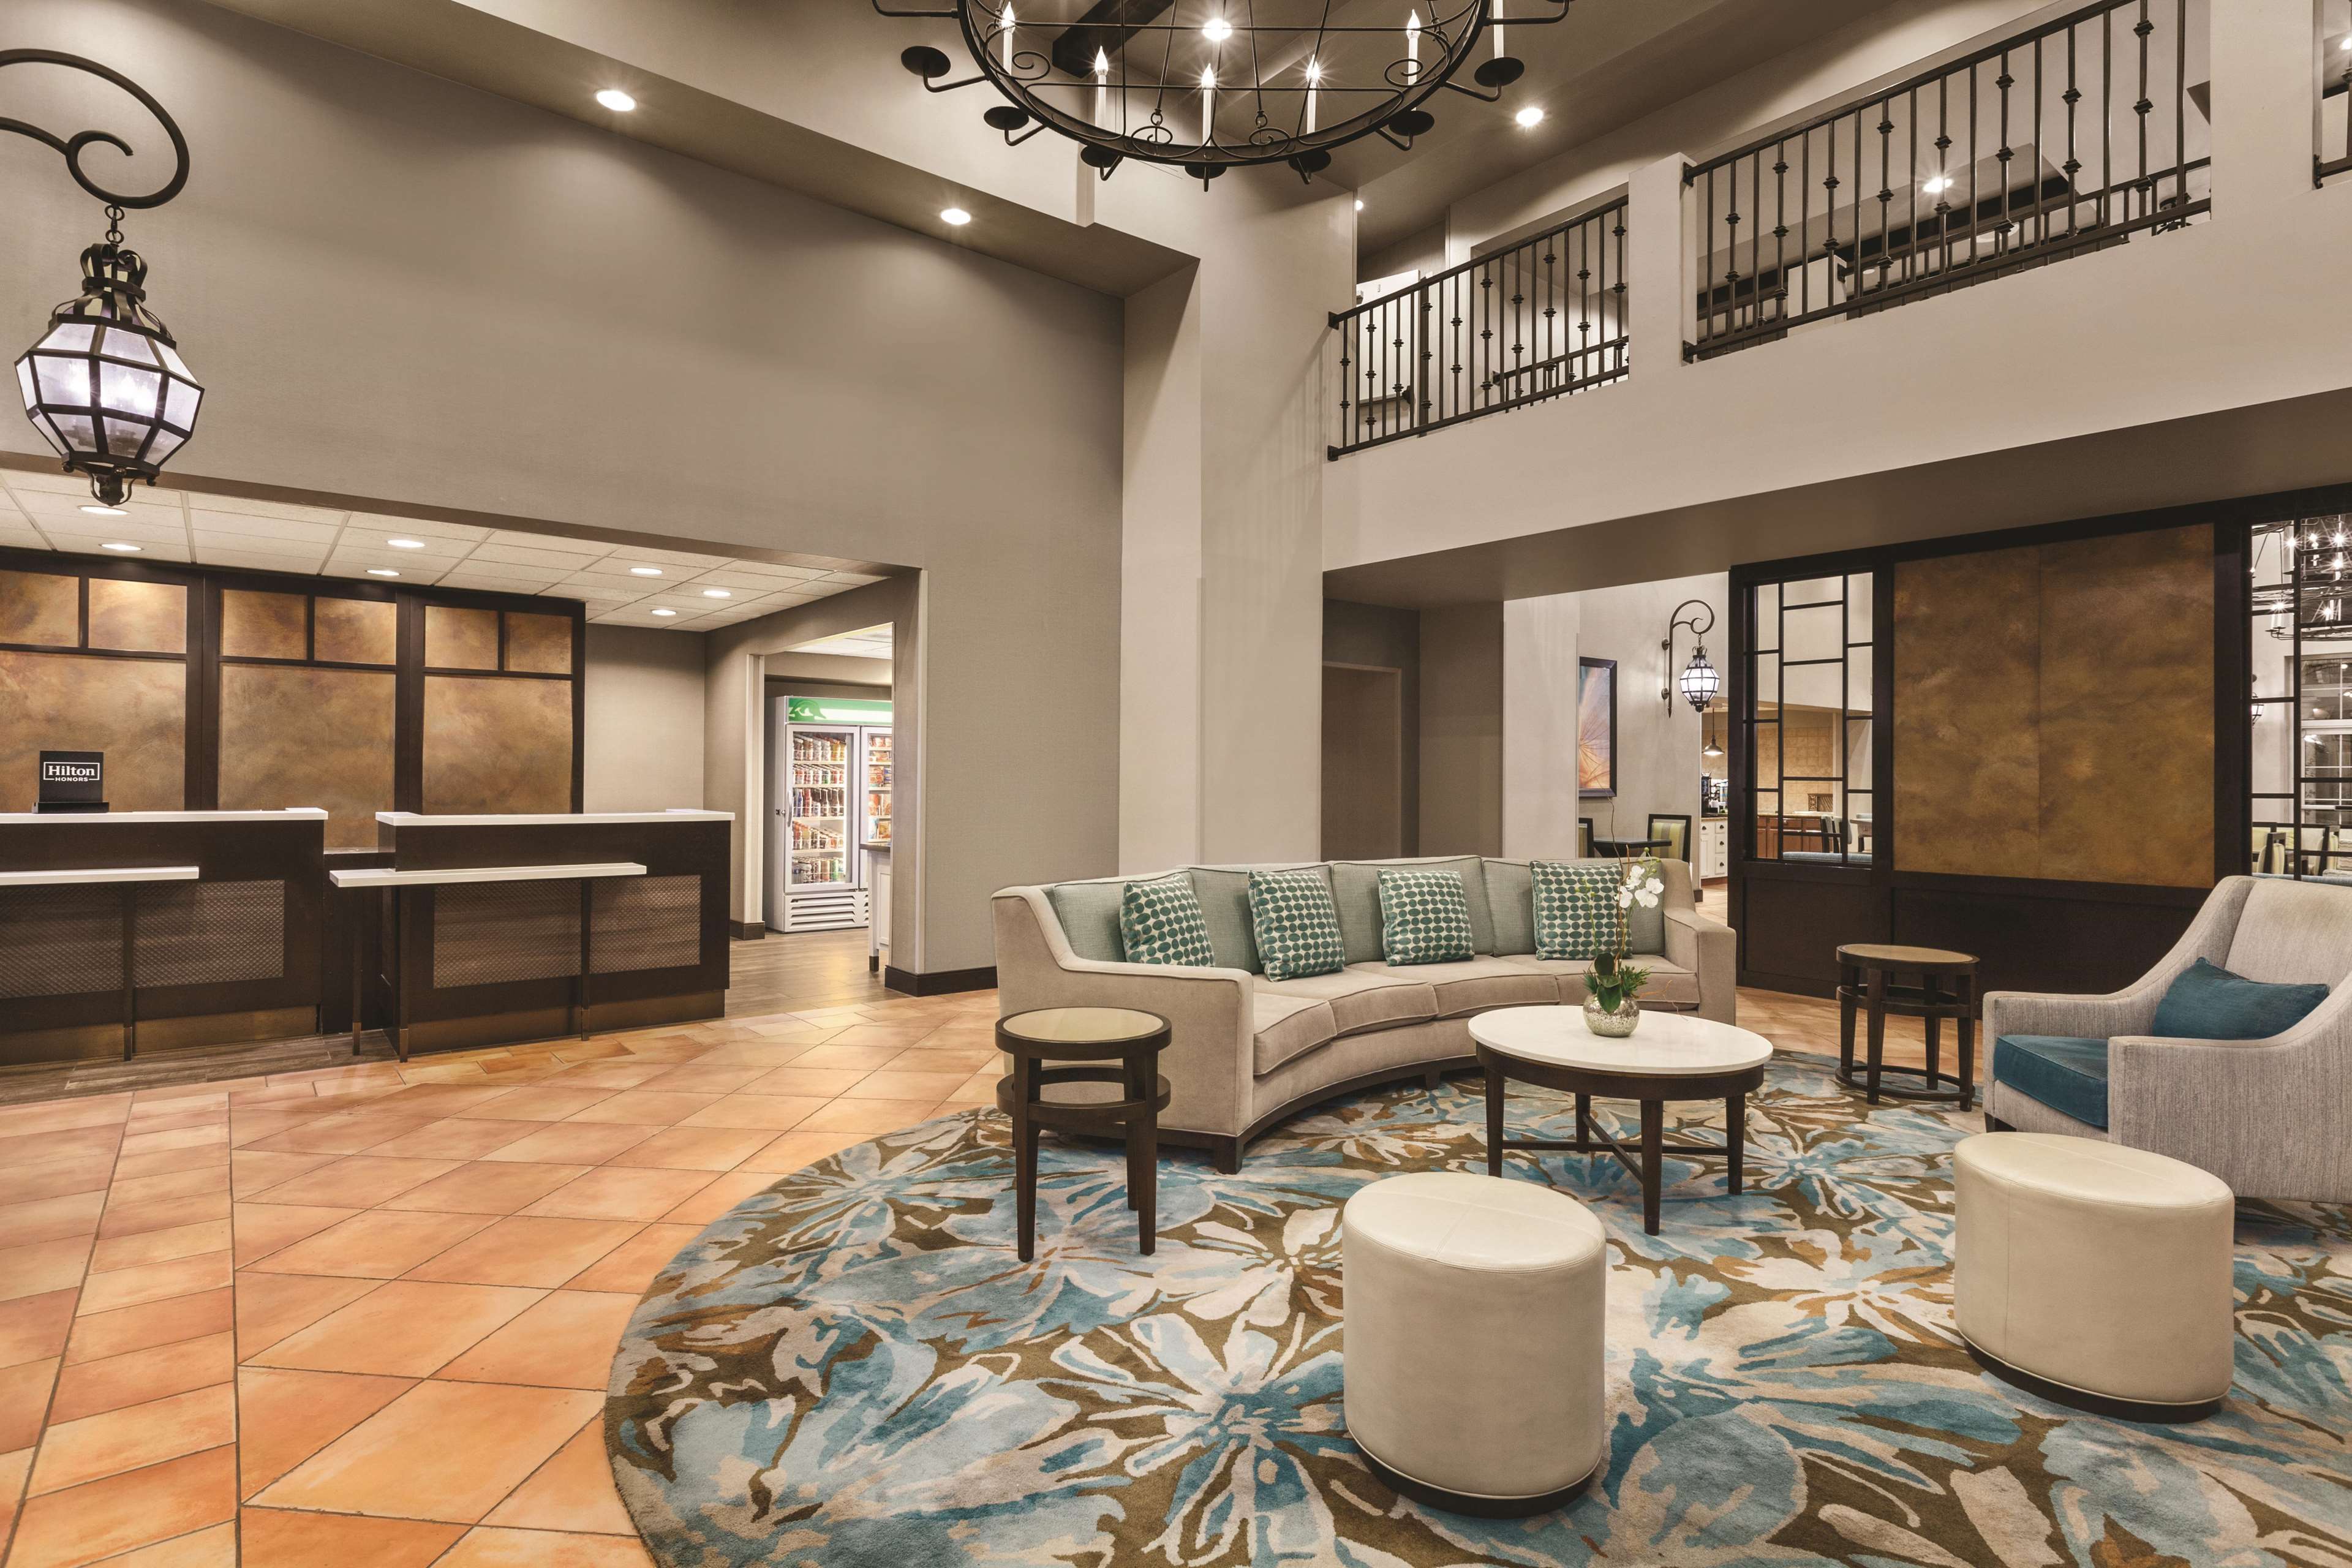 Homewood Suites by Hilton La Quinta, 45-200 Washington Street, La